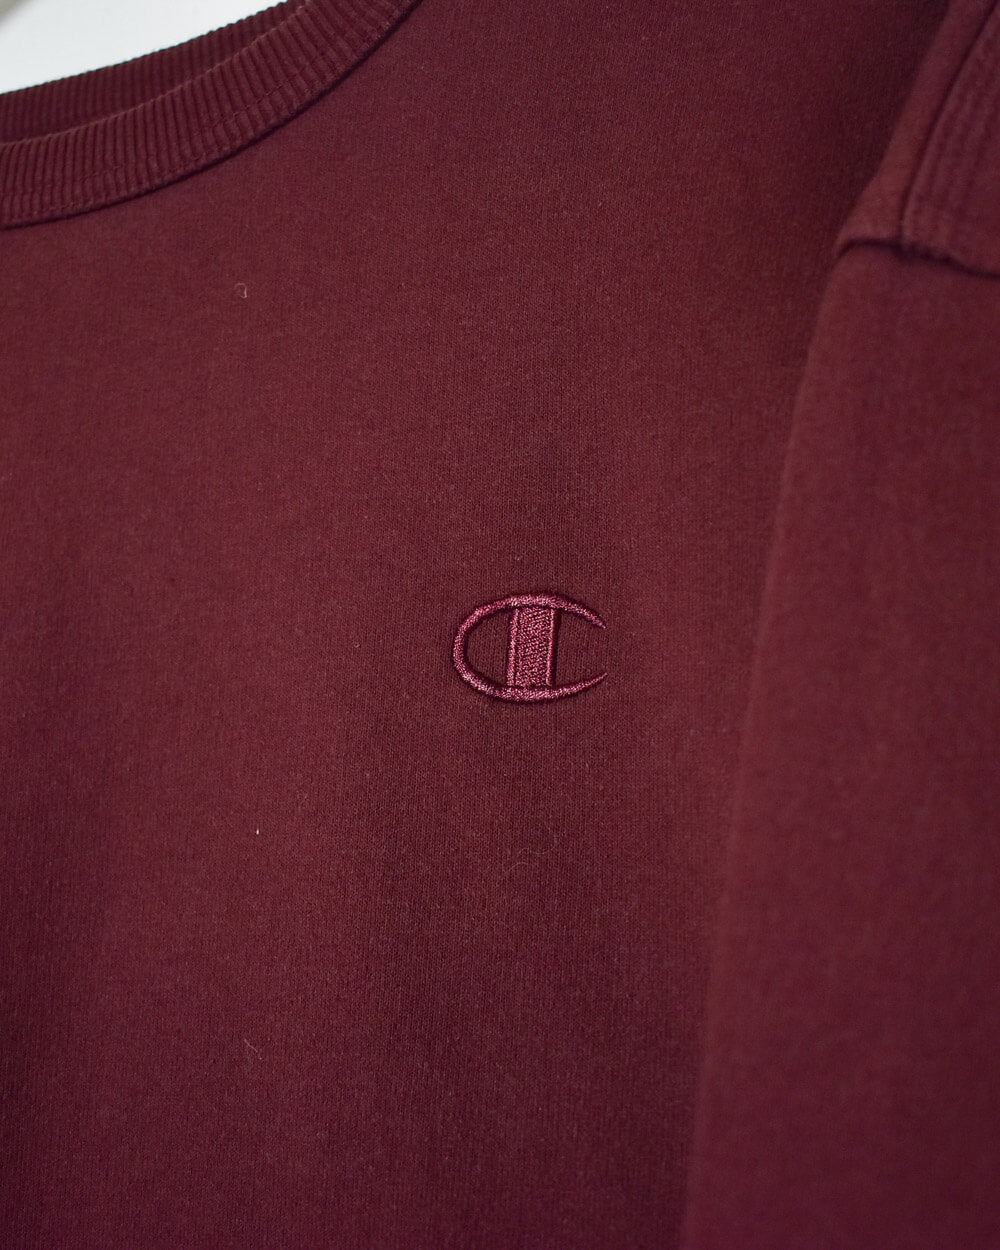 Maroon Champion Sweatshirt - Medium